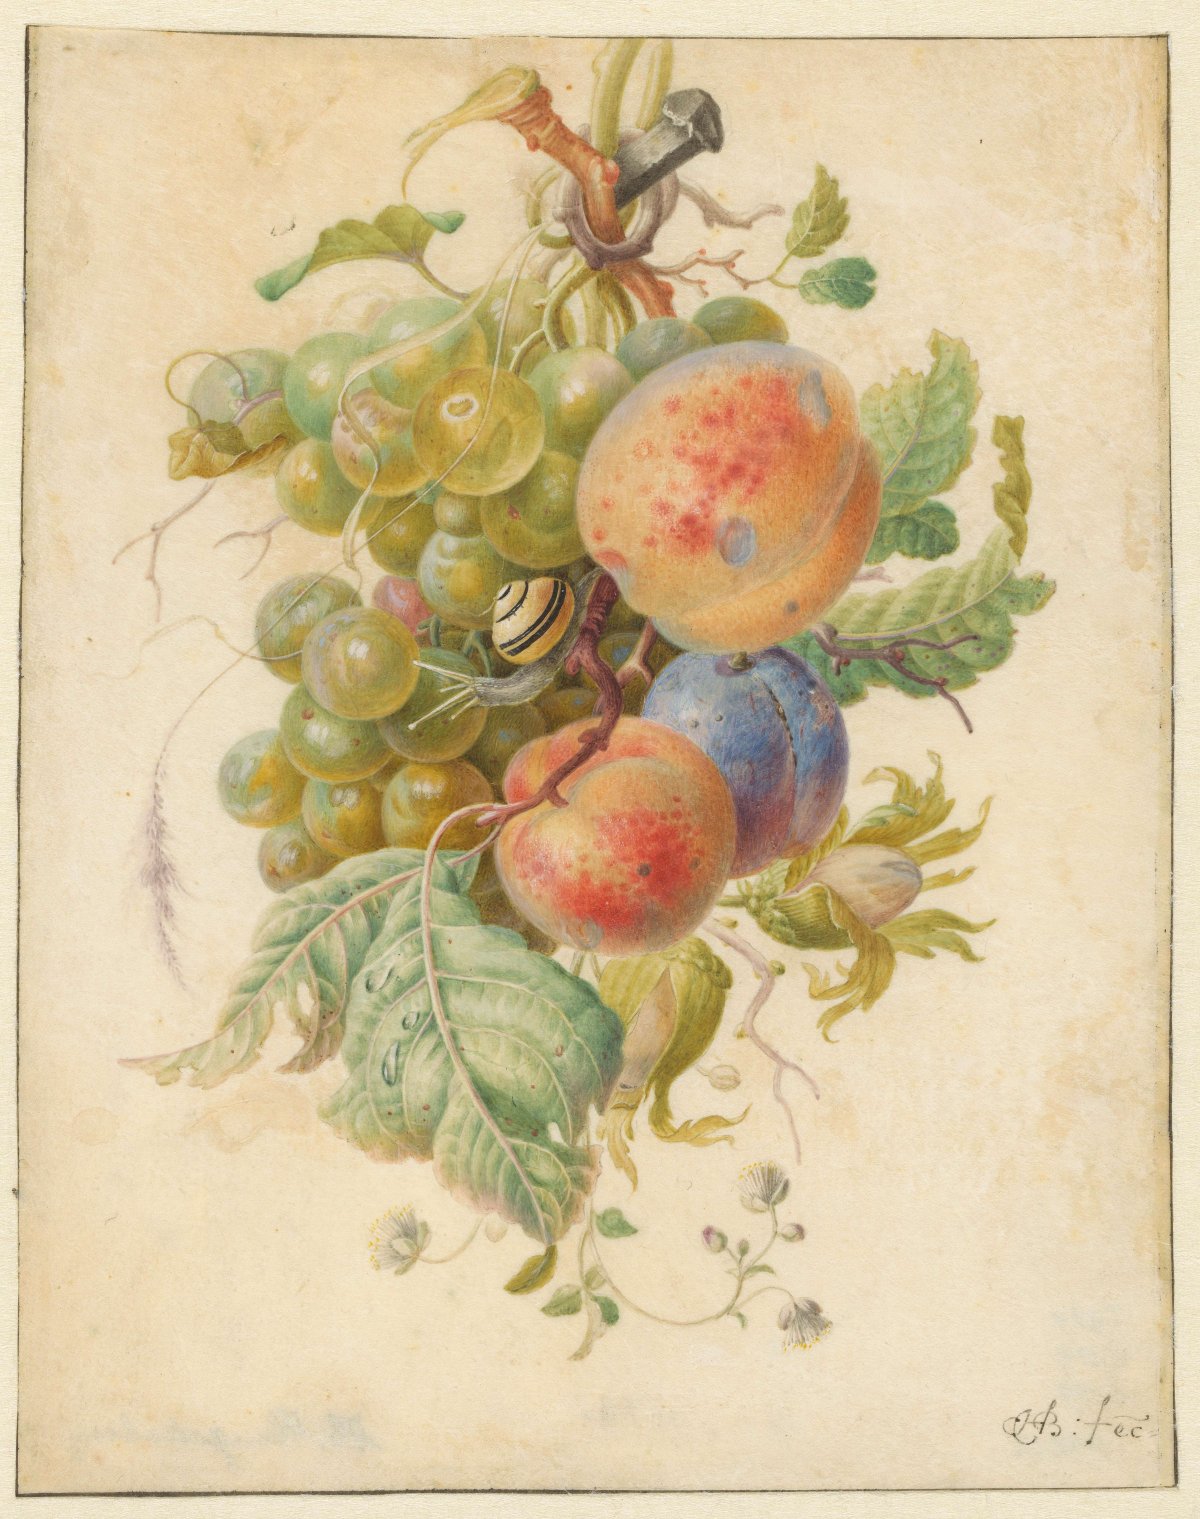 Festoon of fruits, Herman Henstenburgh, 1677 - 1726